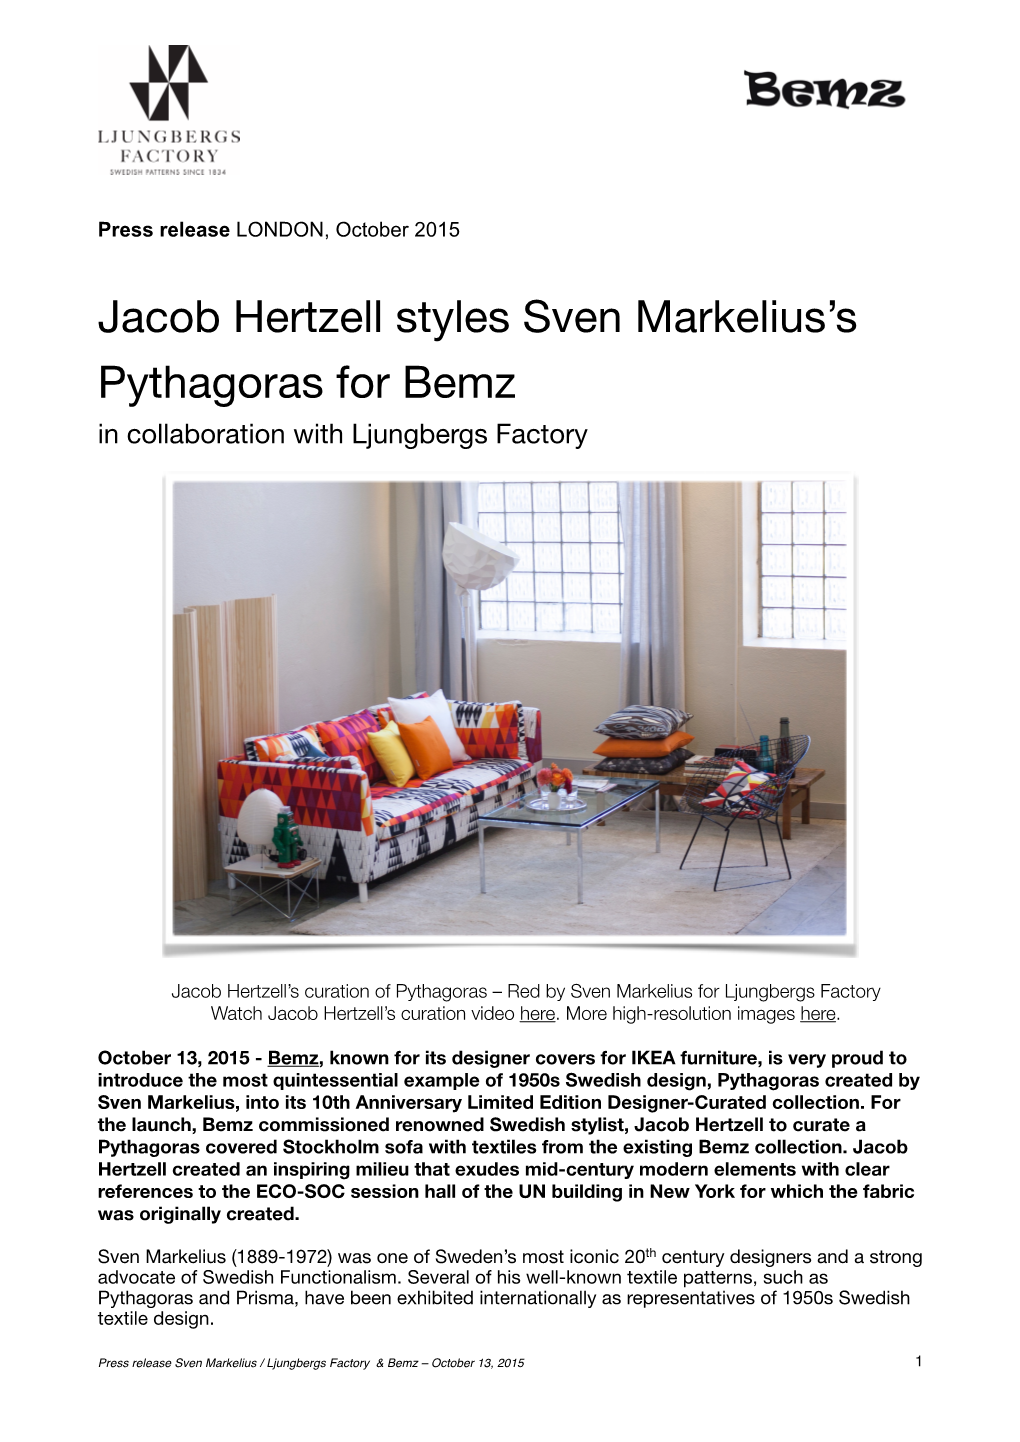 Jacob Hertzell Styles Sven Markelius's Pythagoras for Bemz